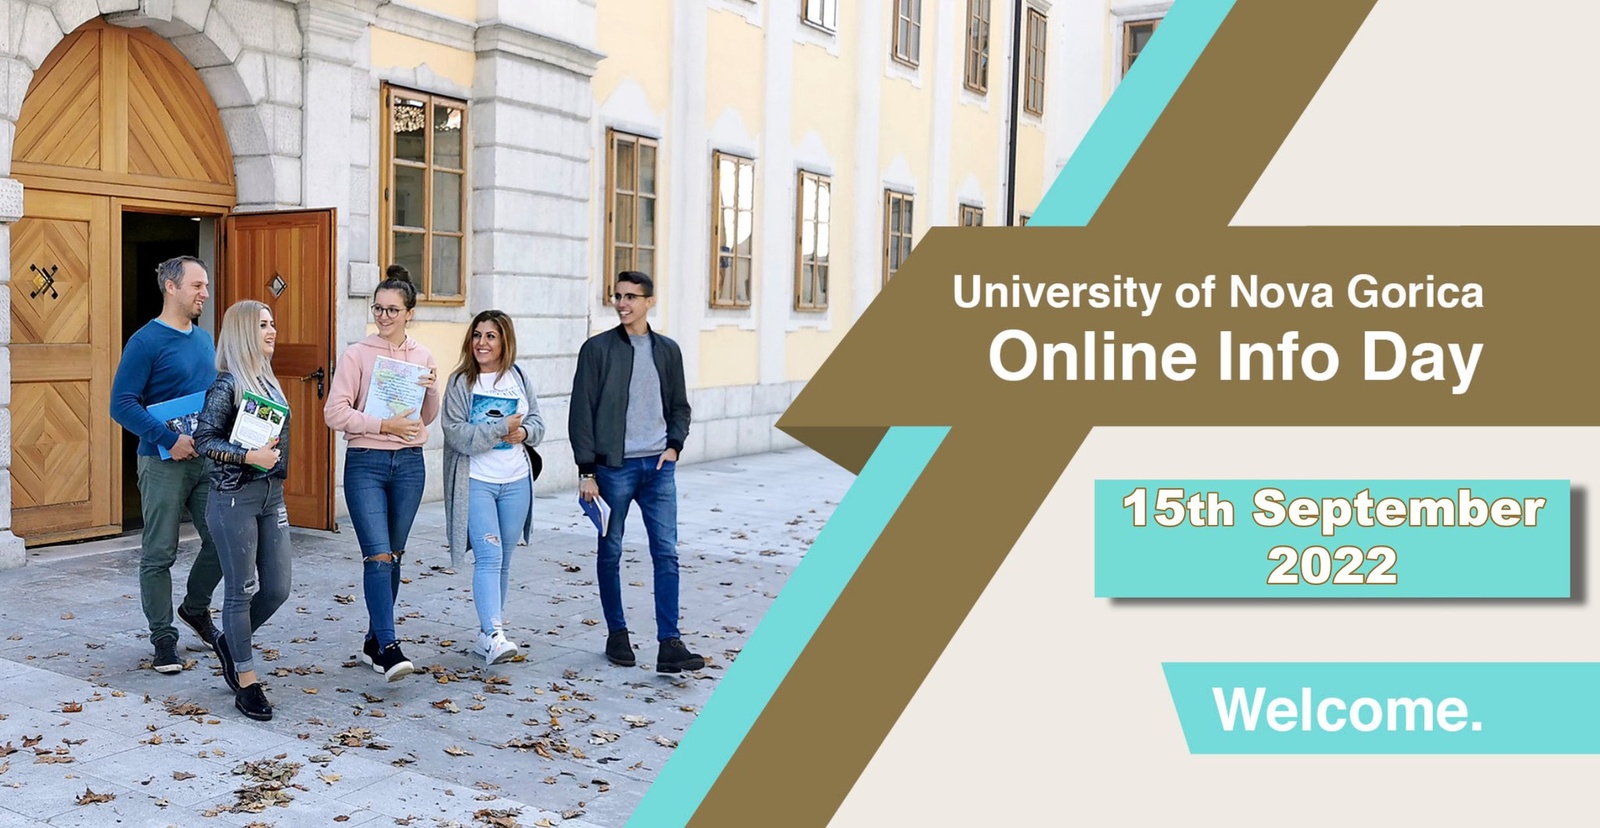 University of Nova Gorica Information Day, 15th September 2022